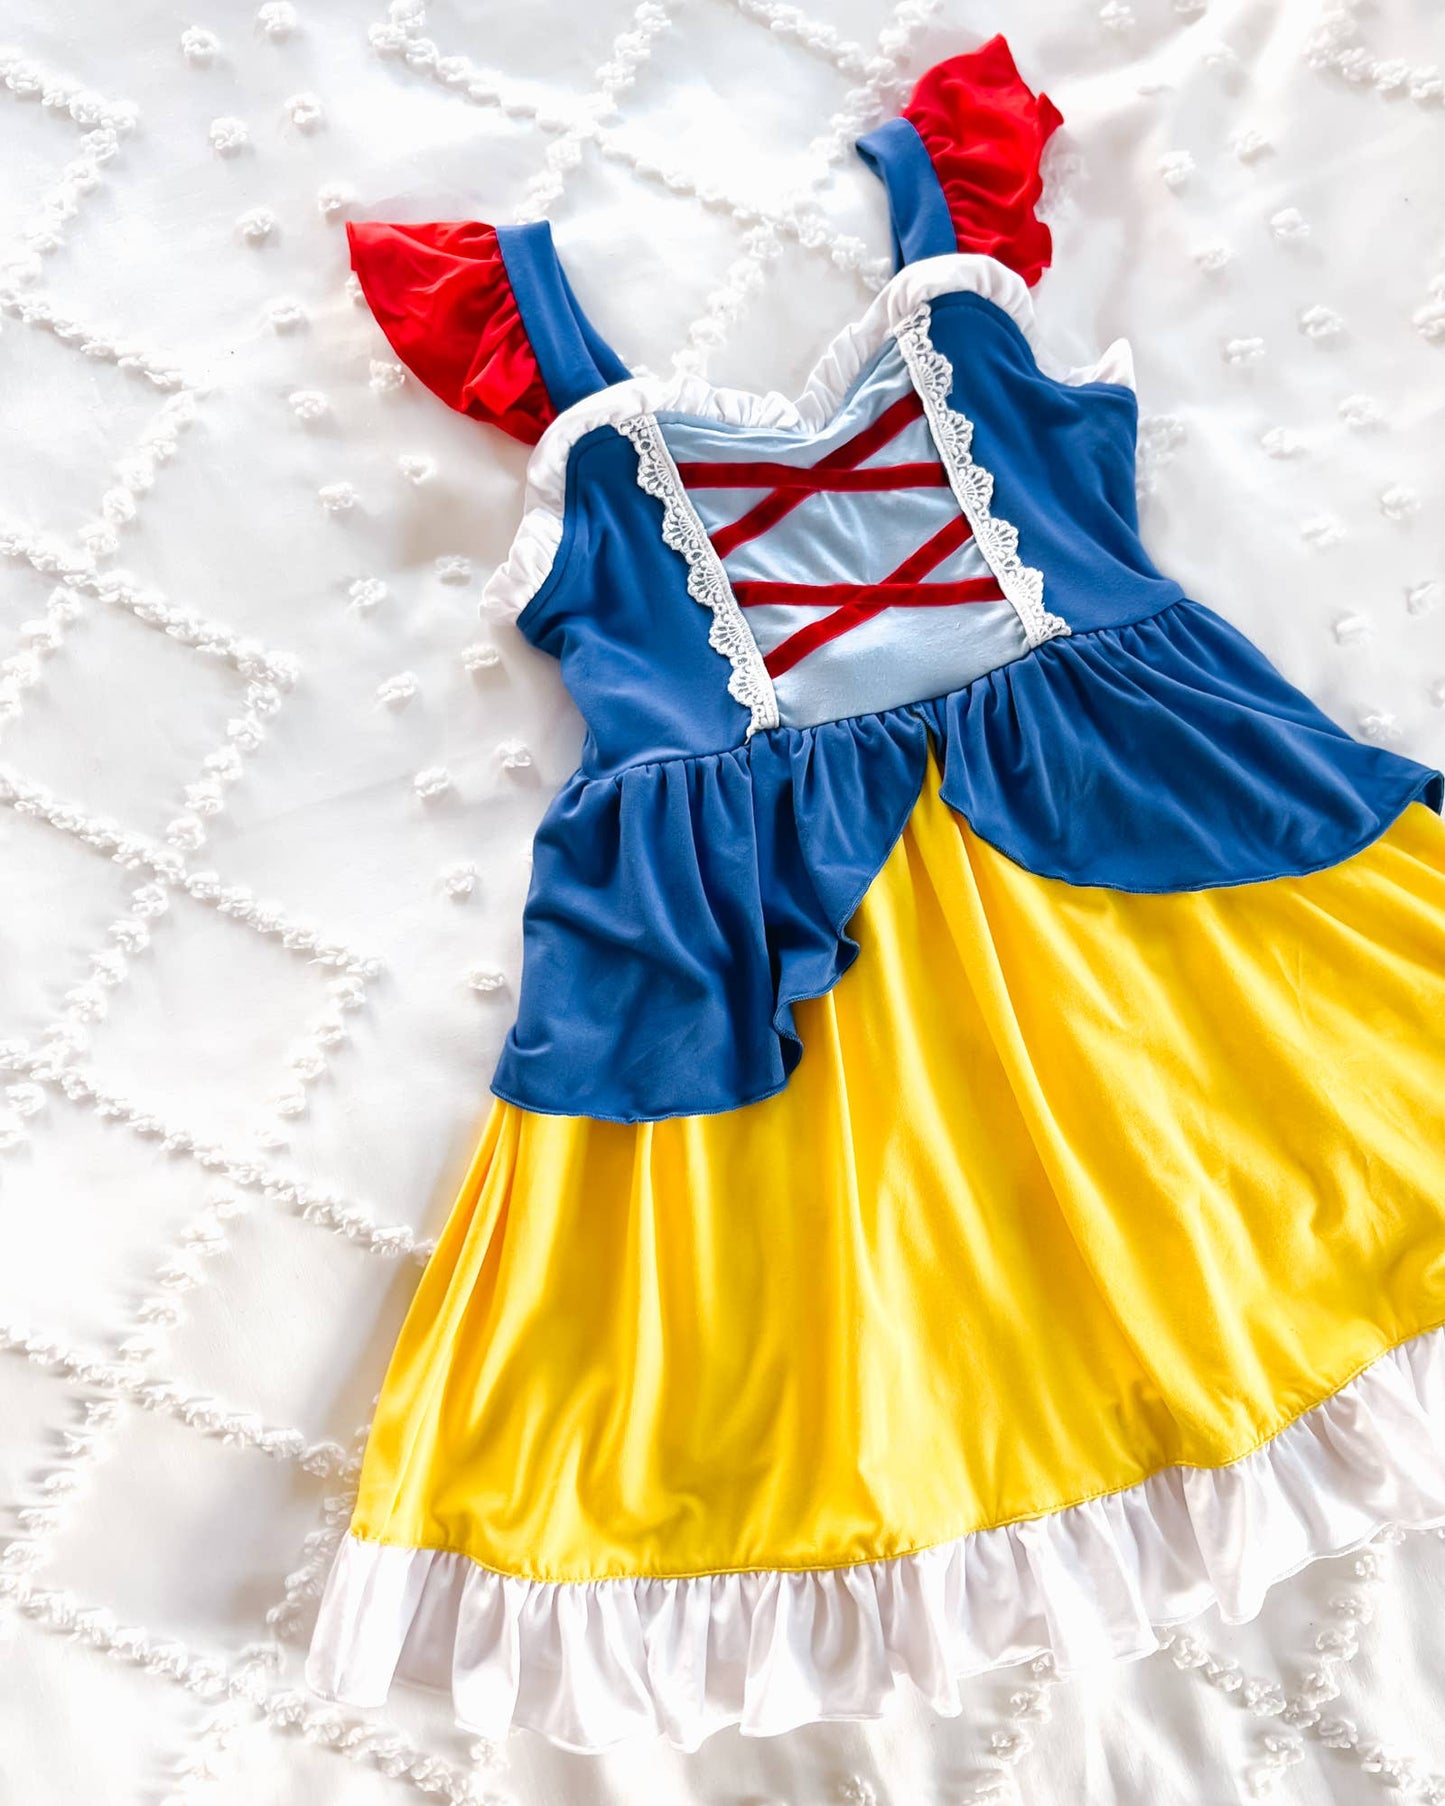 Fairytale Twirl | Fairest Princess Dress